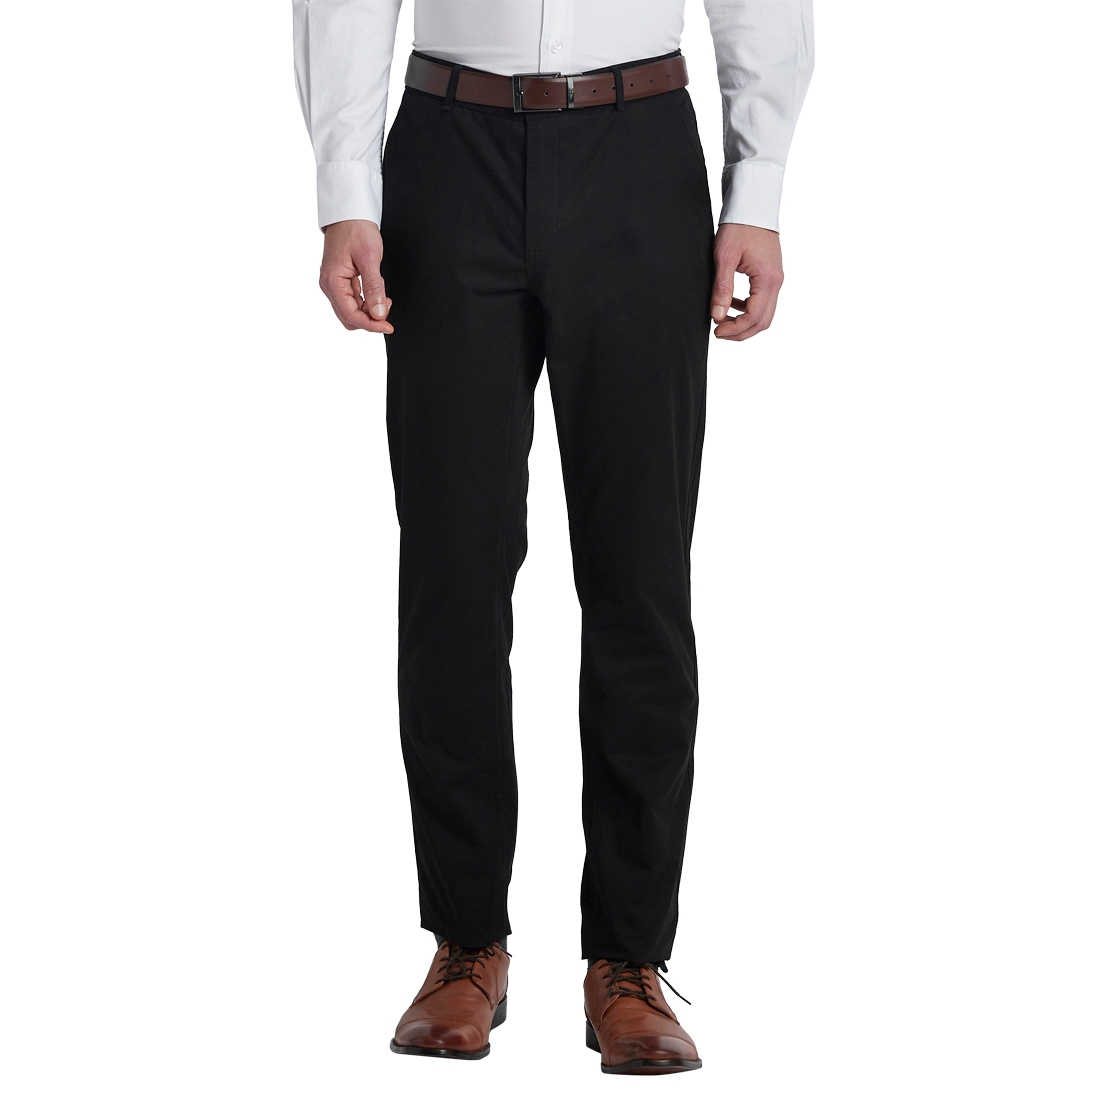 ColorPlus Black Tailored Fit Trouser